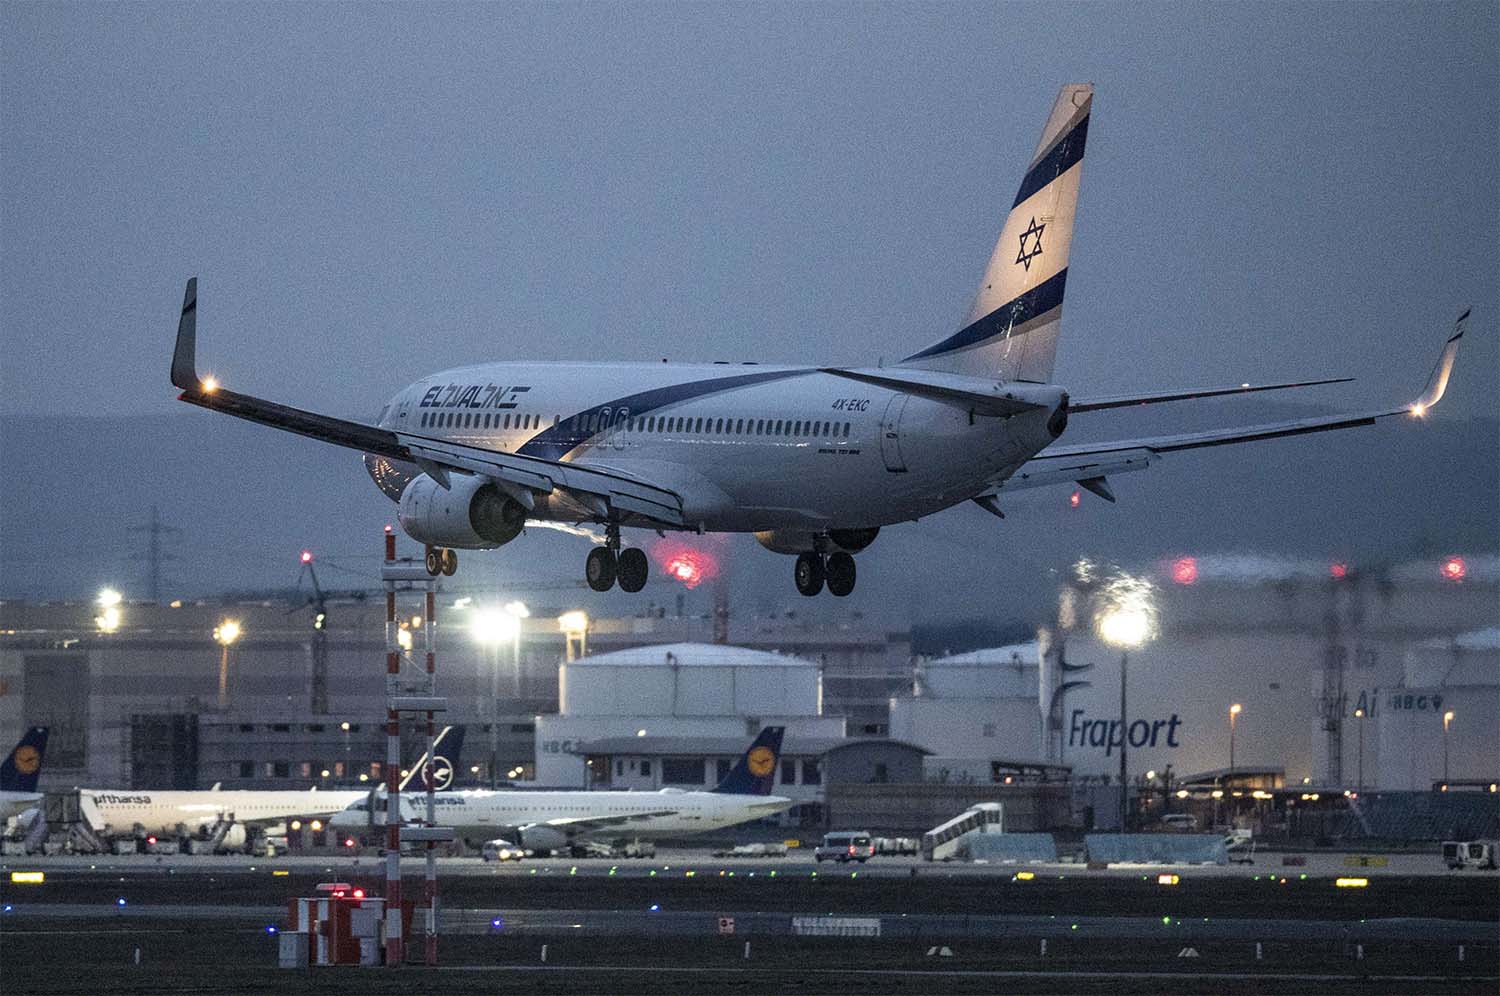 A passenger plane of the Israeli El-Al Airways lands at Frankfurt Airport